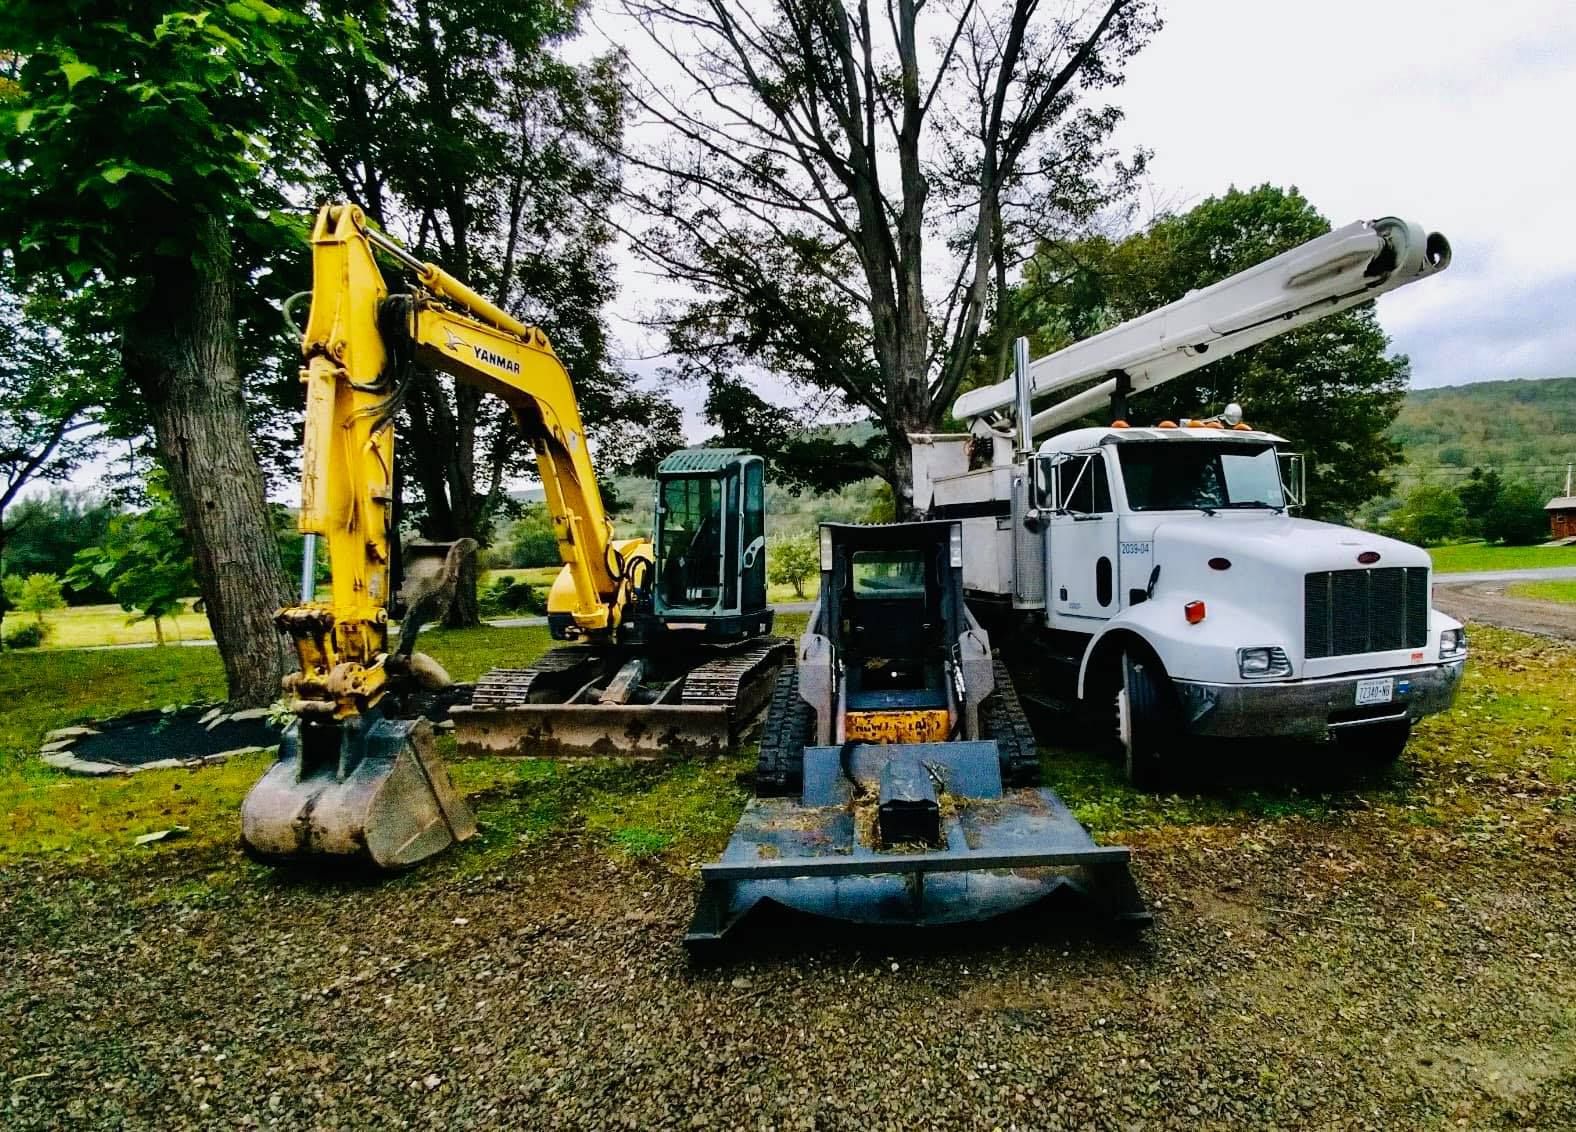 a yanmar excavator sits next to a peterbilt truck